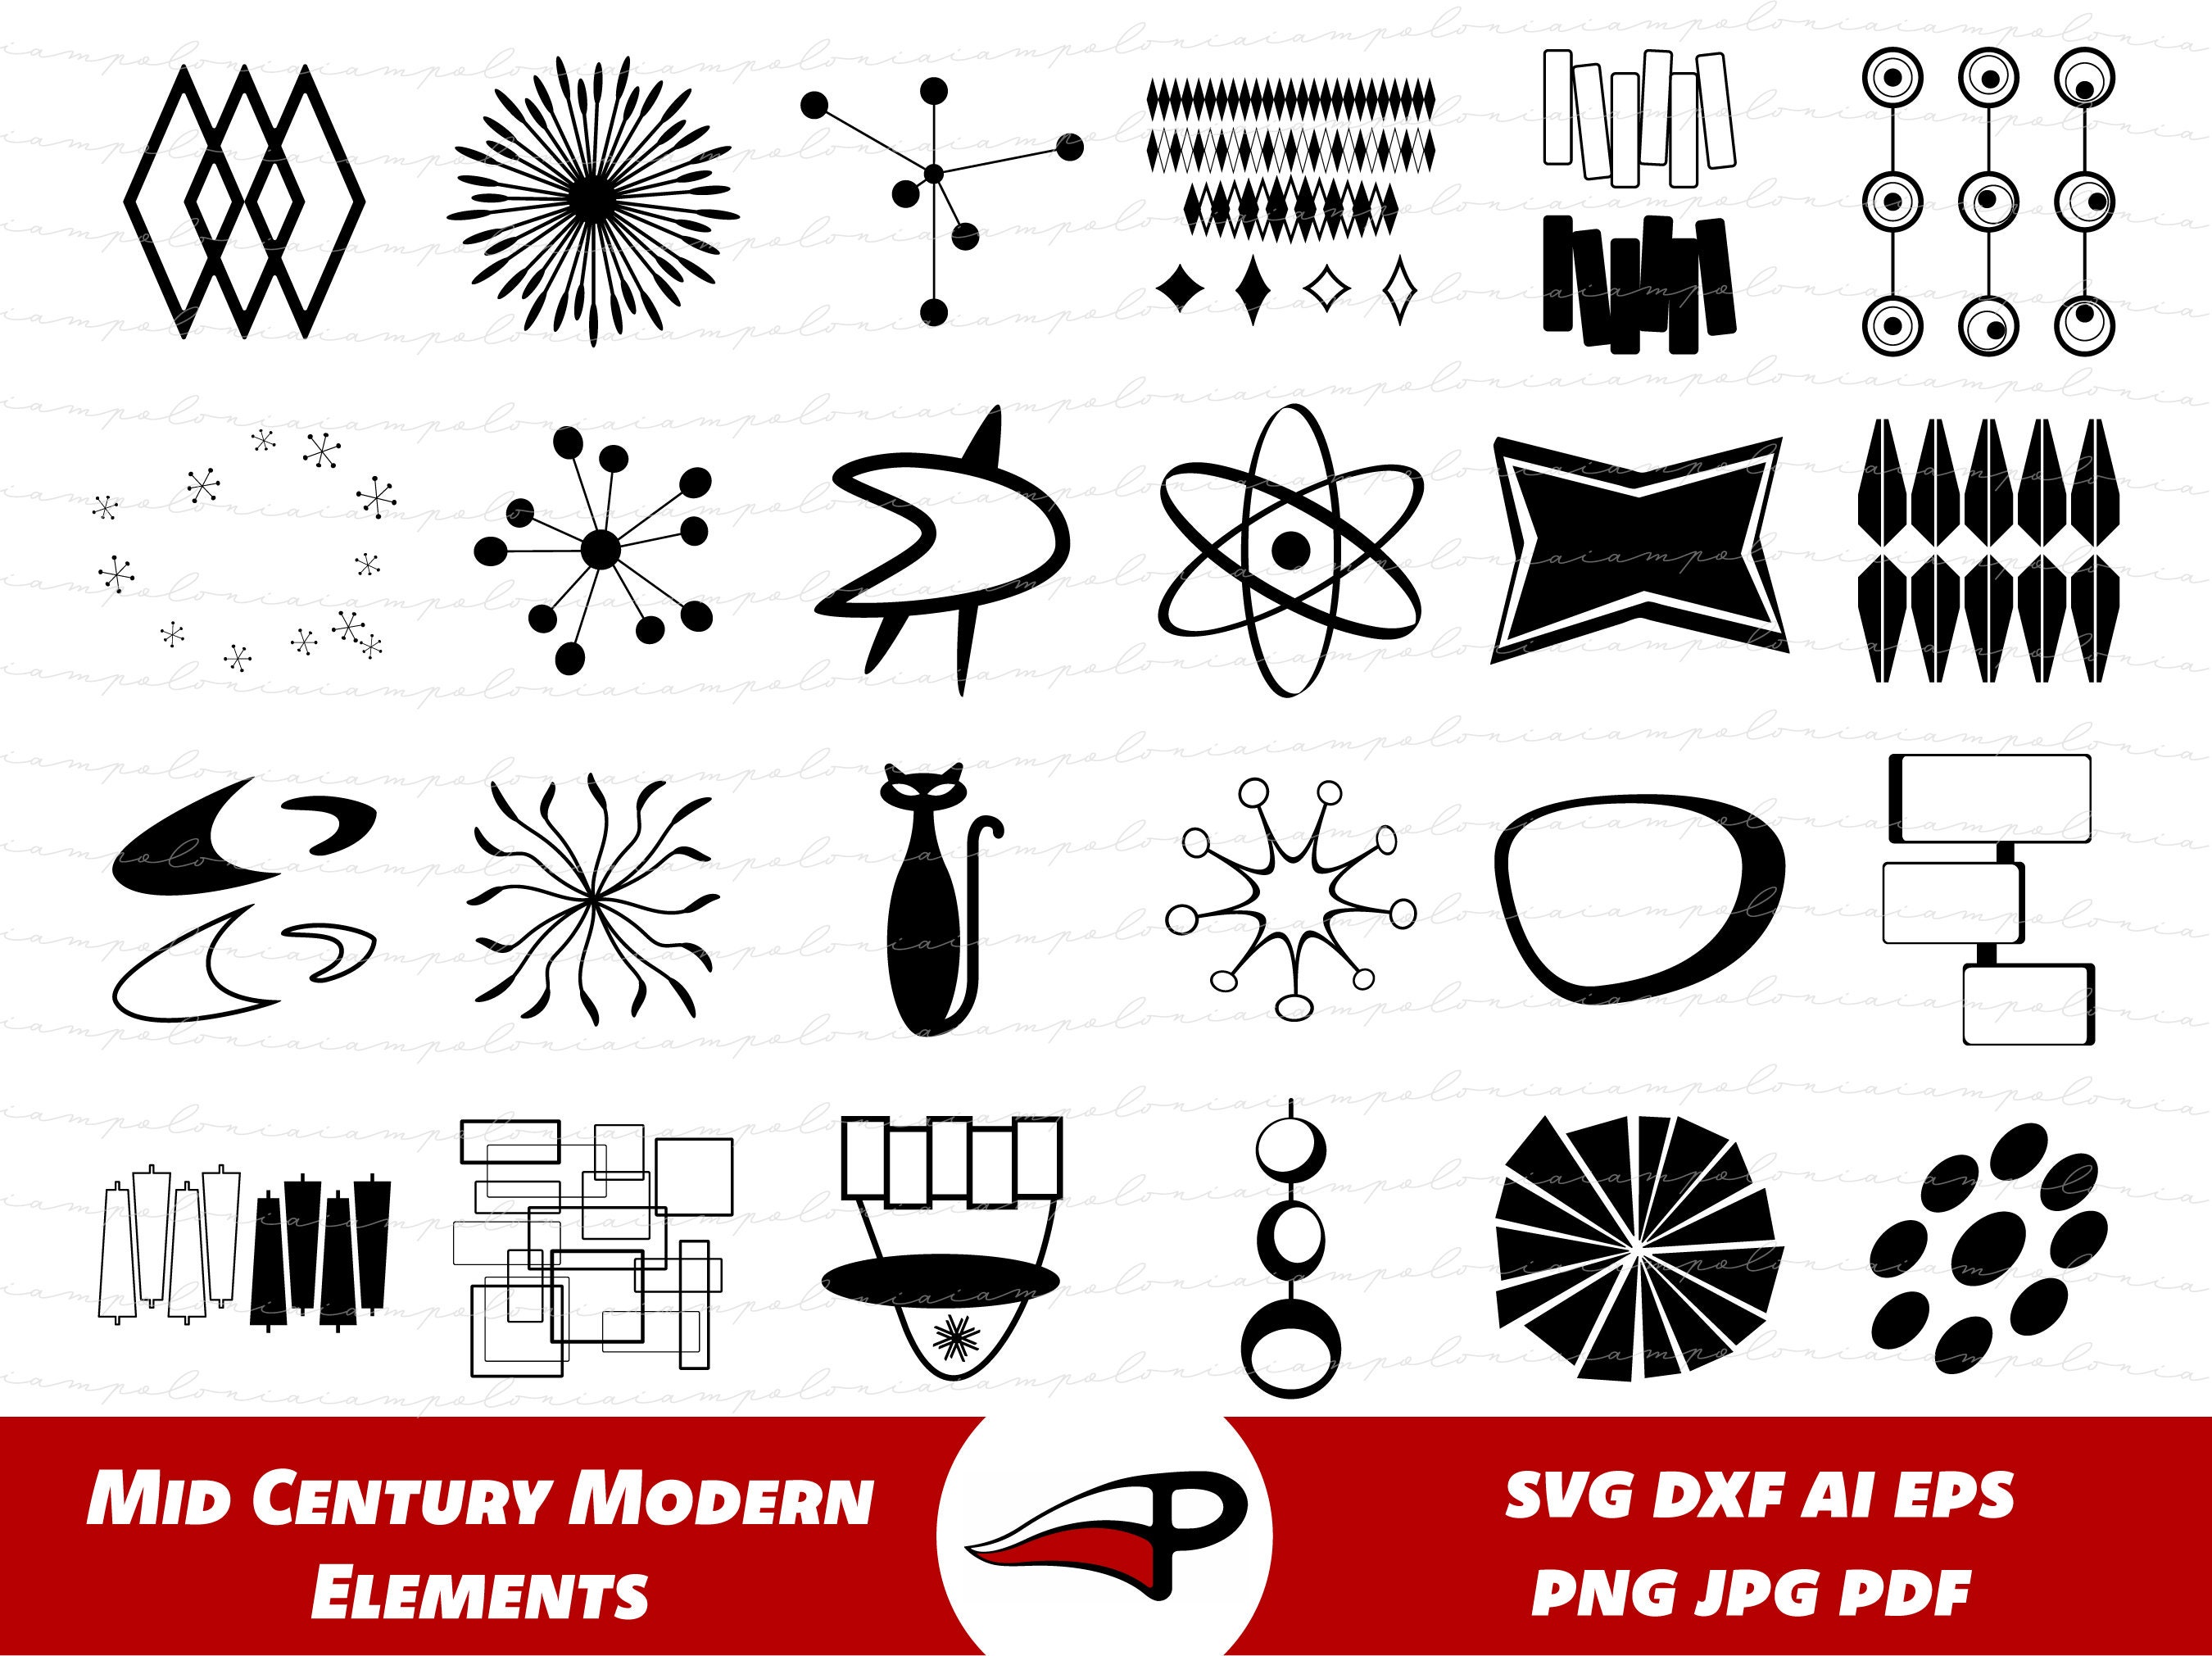 Mid Century Modern Geometric Shapes Stencil